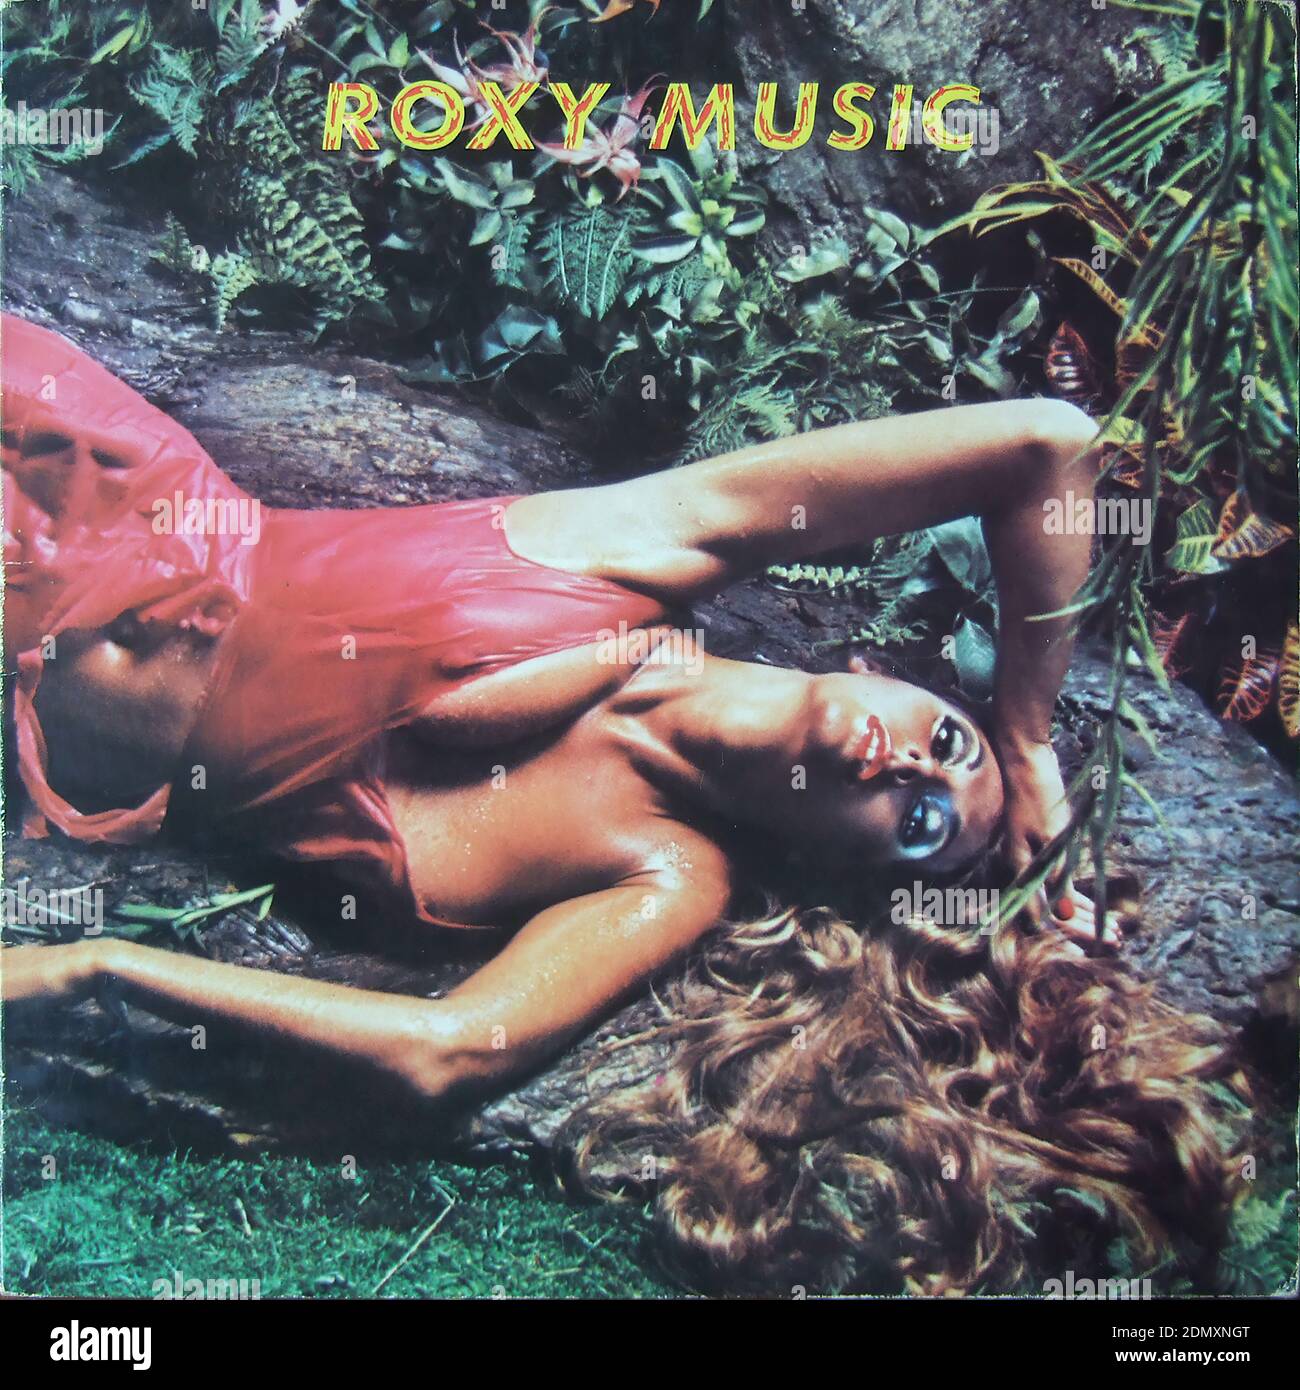 Roxy Music - Stranded - Vintage vinyl album cover Stock Photo